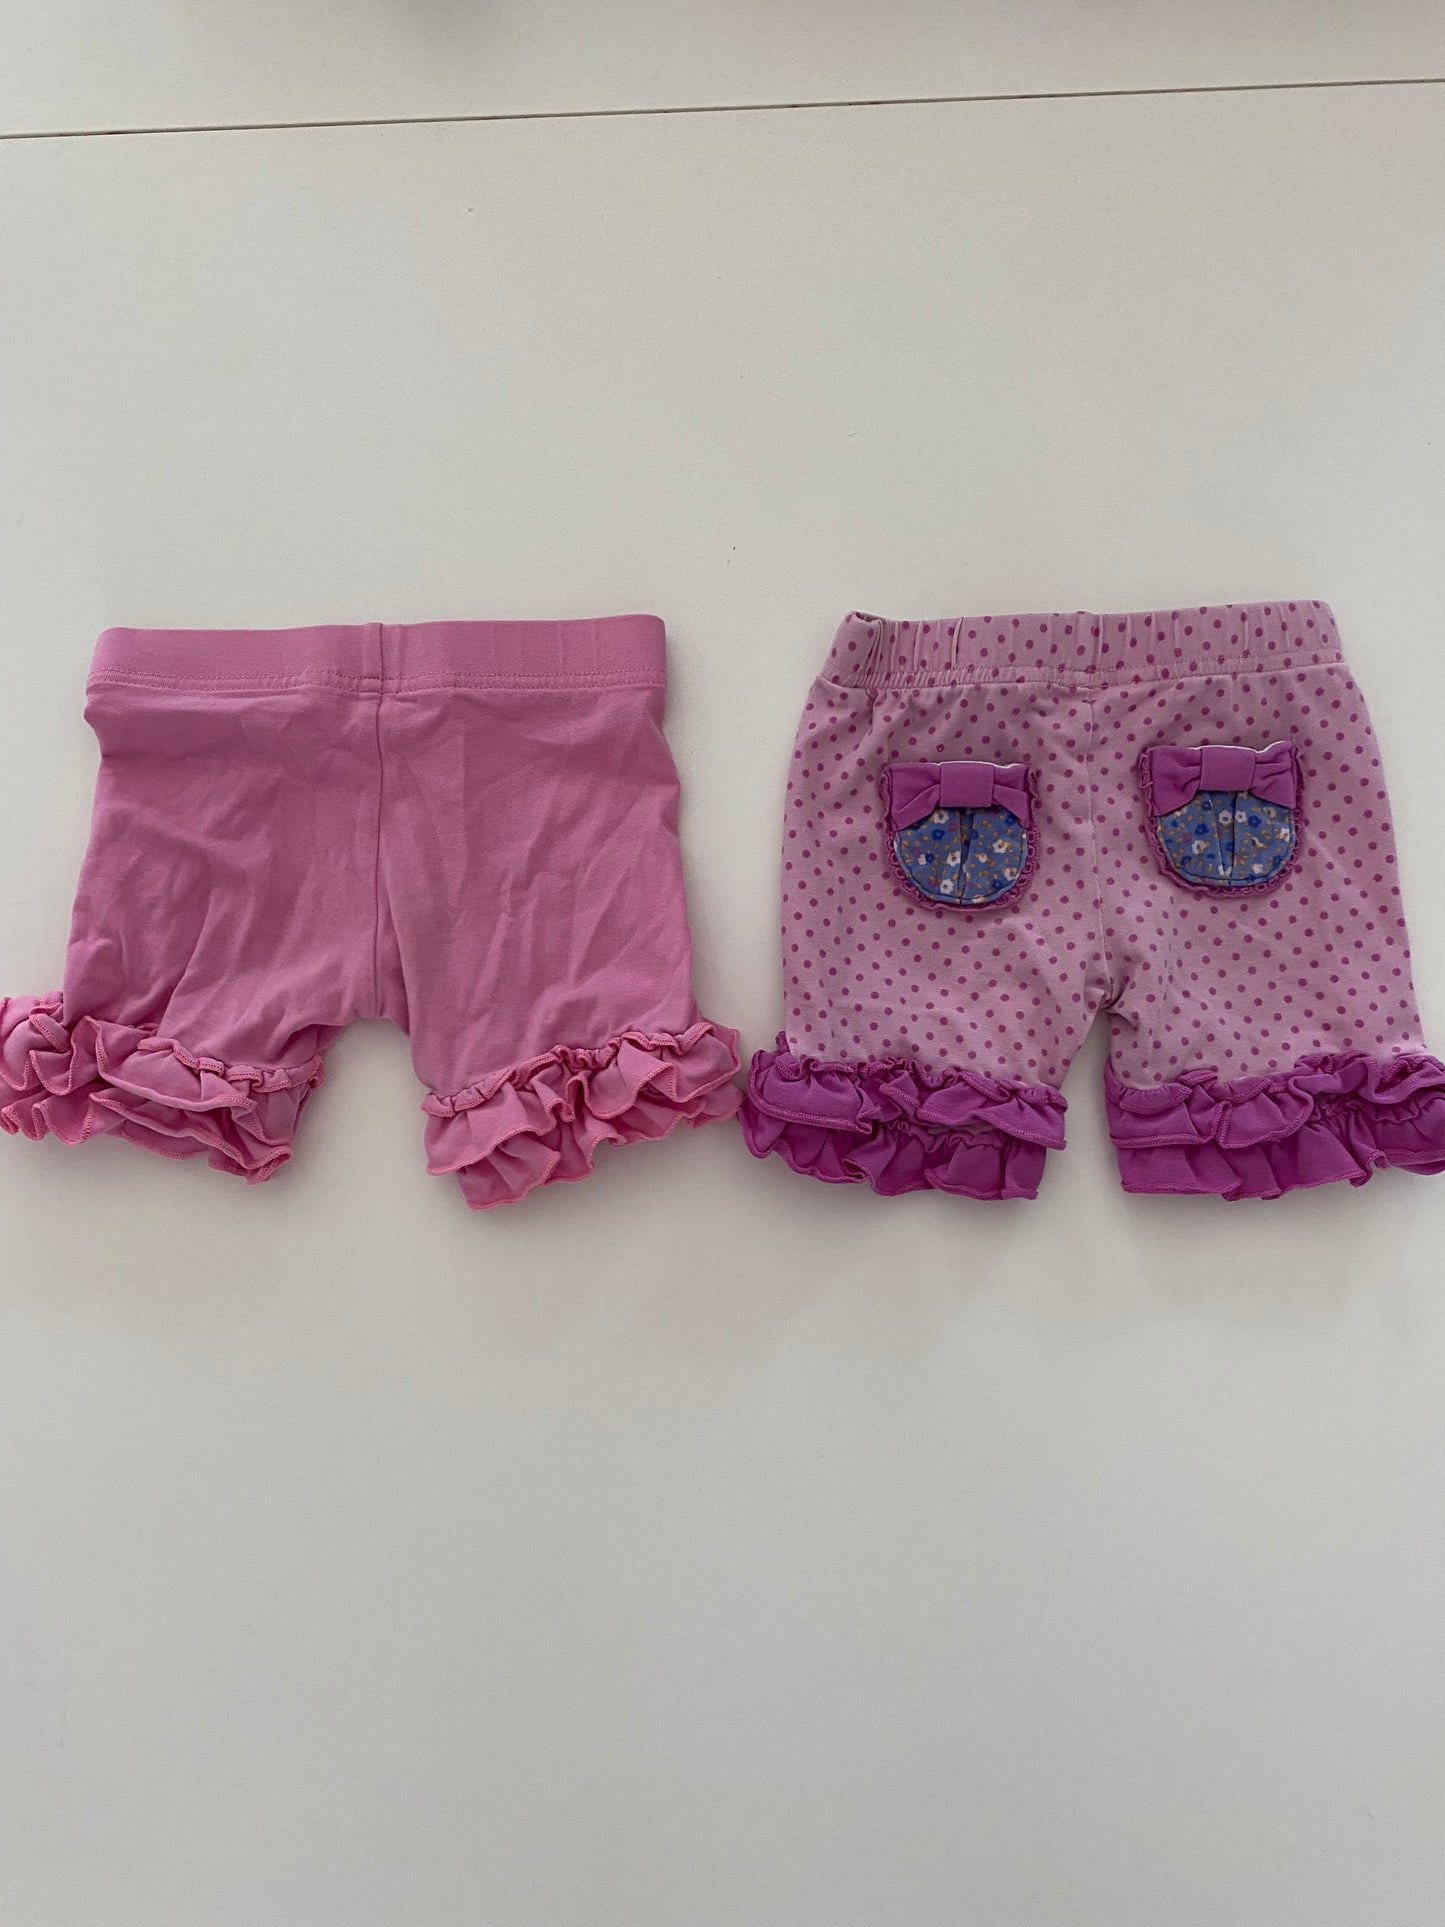 Matilda Jane Pink ruffle bike shorts and purple polka dot ruffle shorts Girls 2